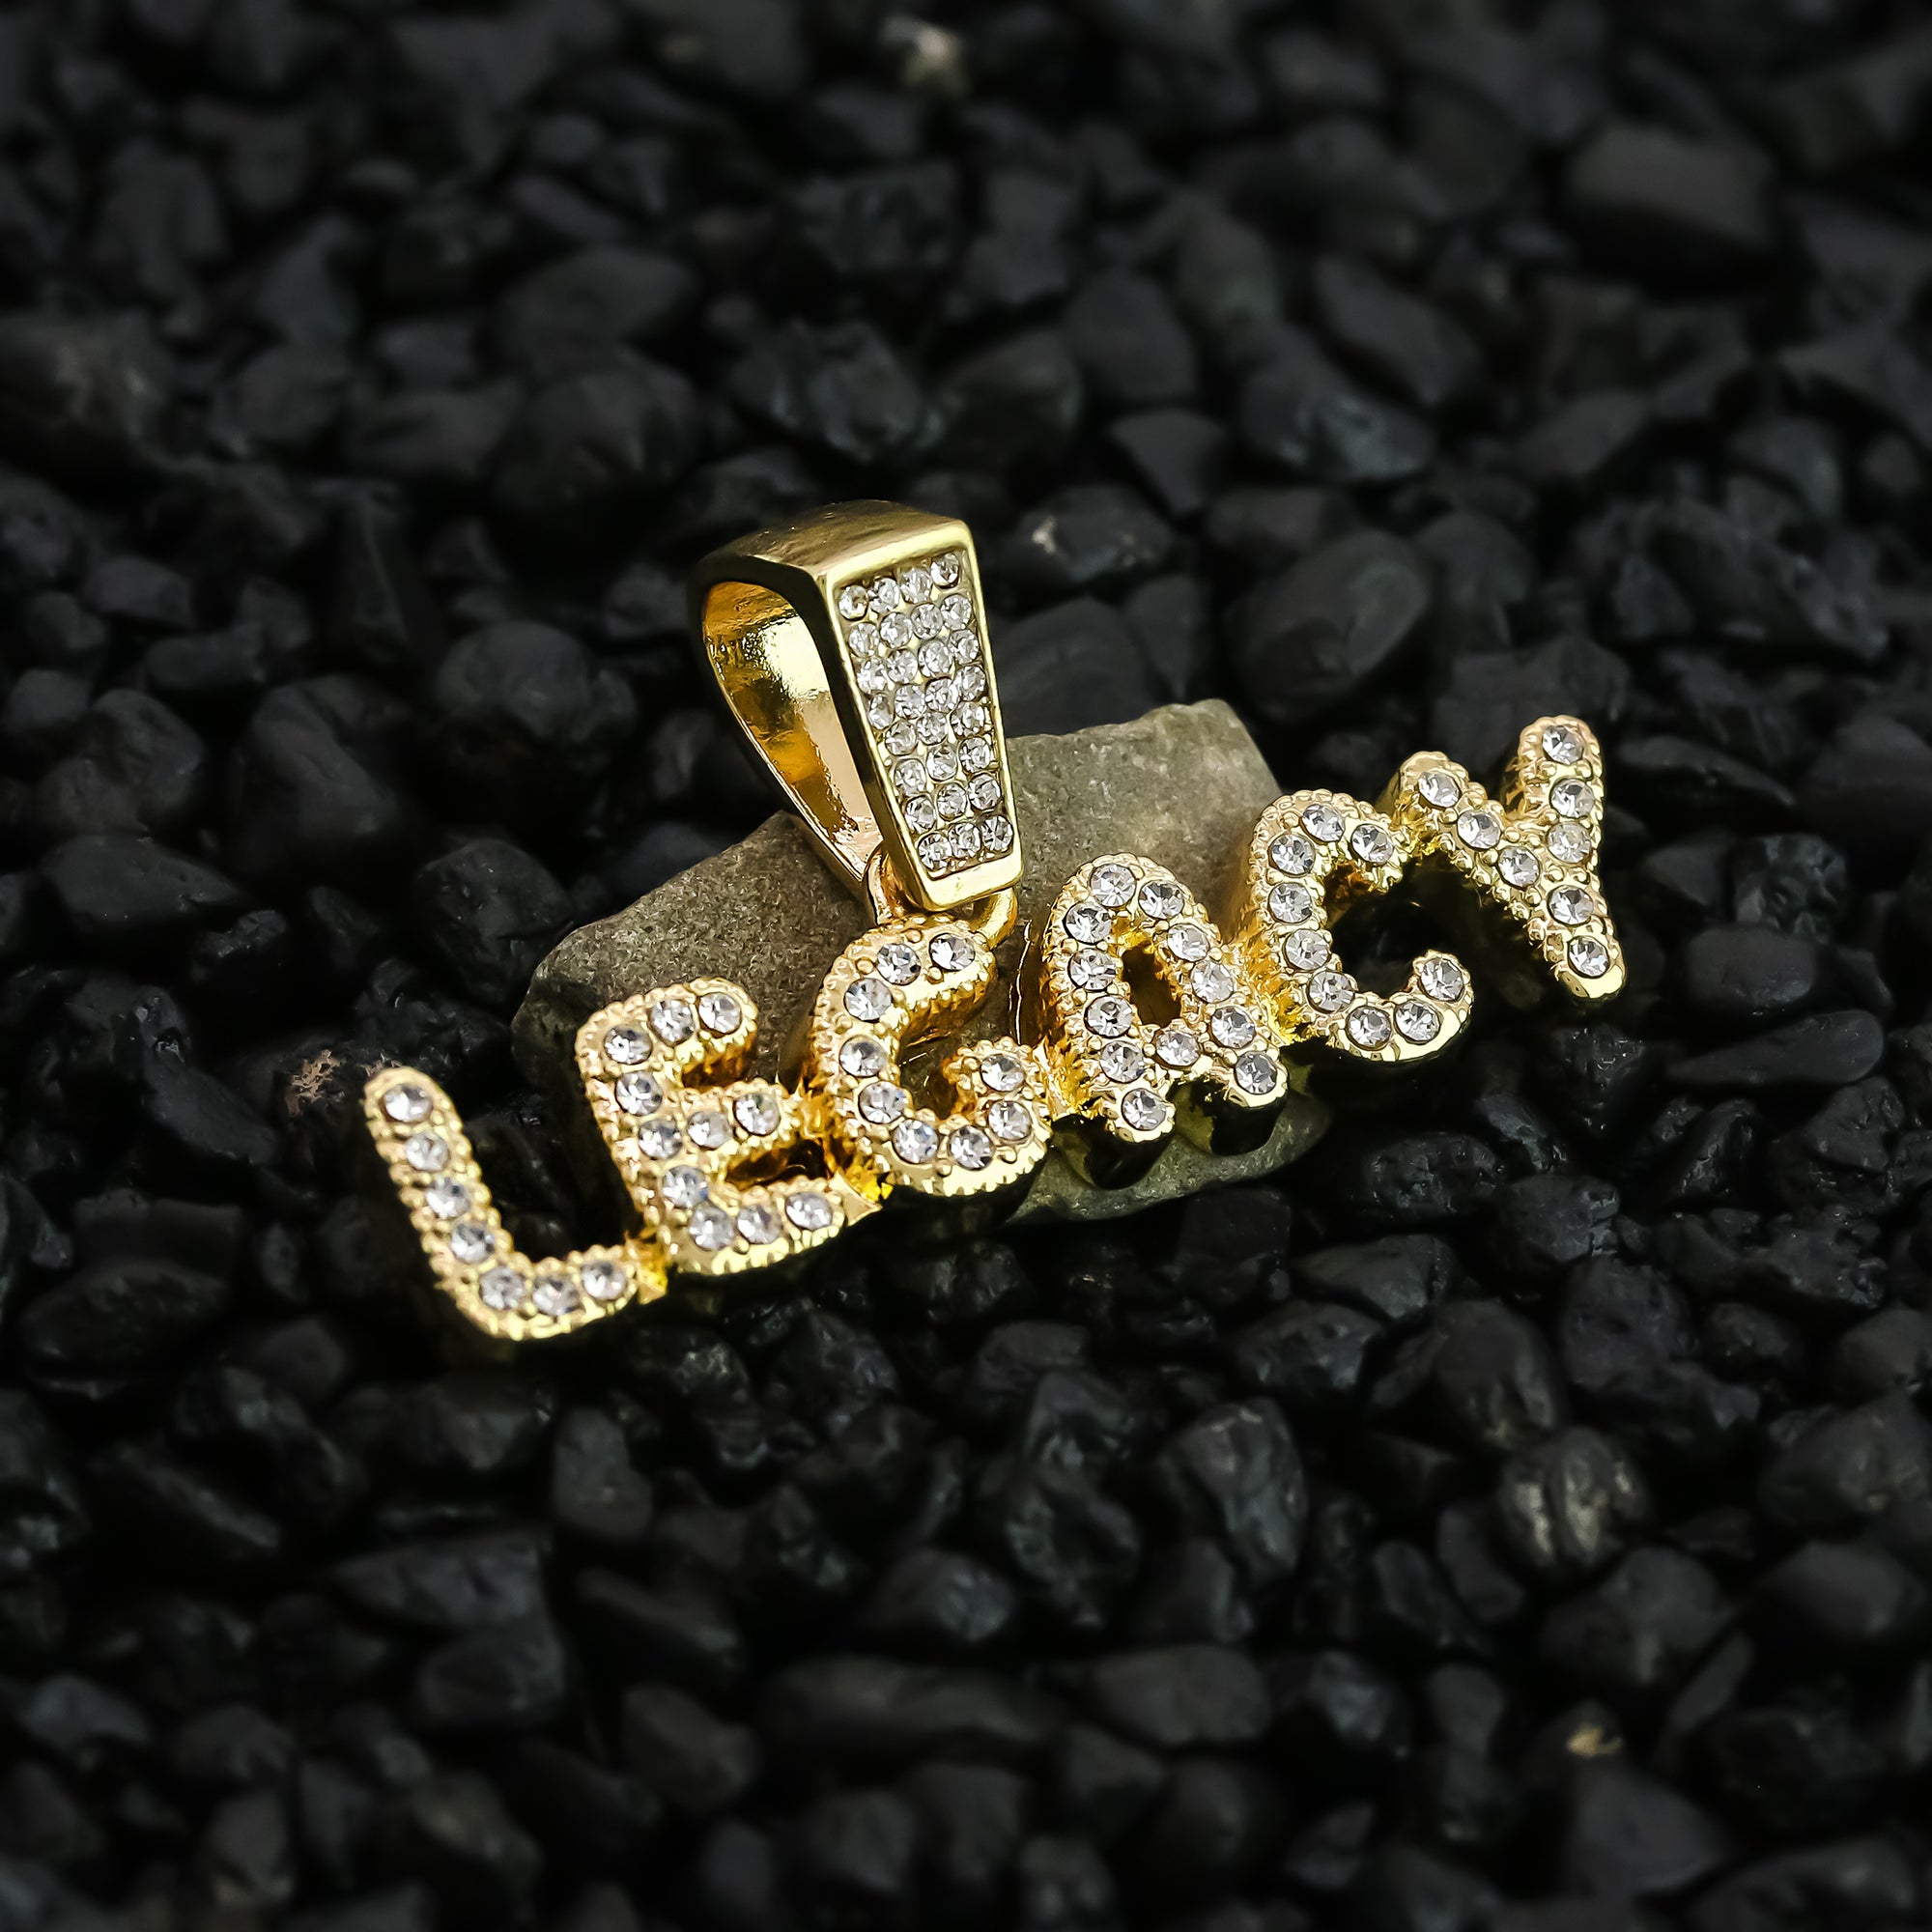 Legacy Pendant Rope Chain Men's Hip Hop 18k Cz Jewelry Necklace